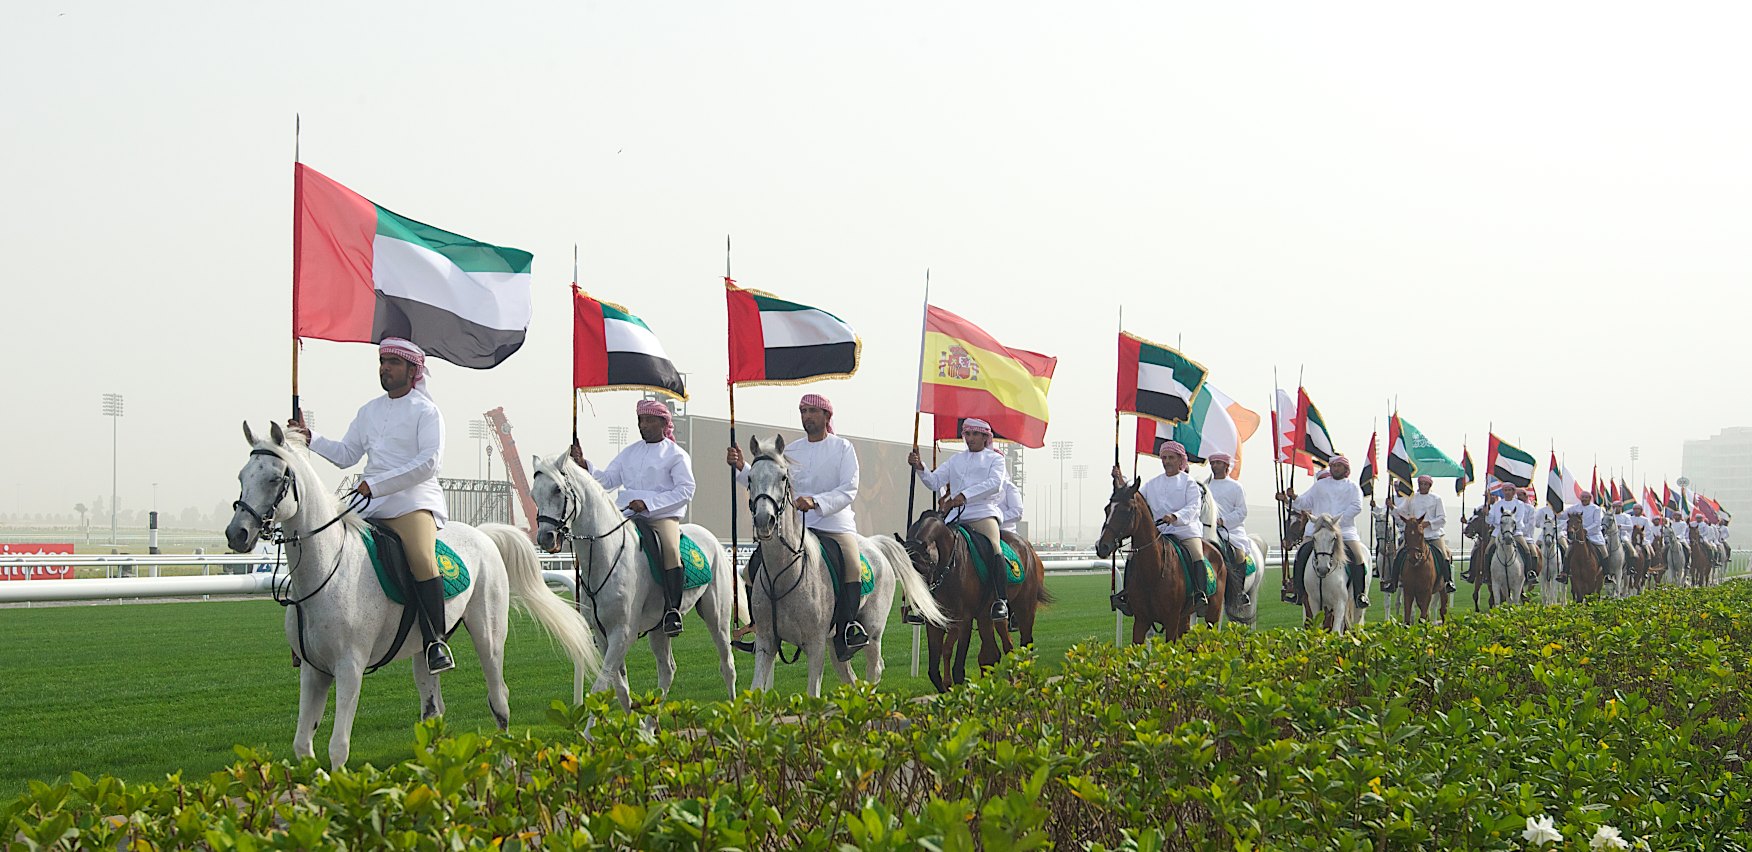 several men on horses holding flags walking on grass